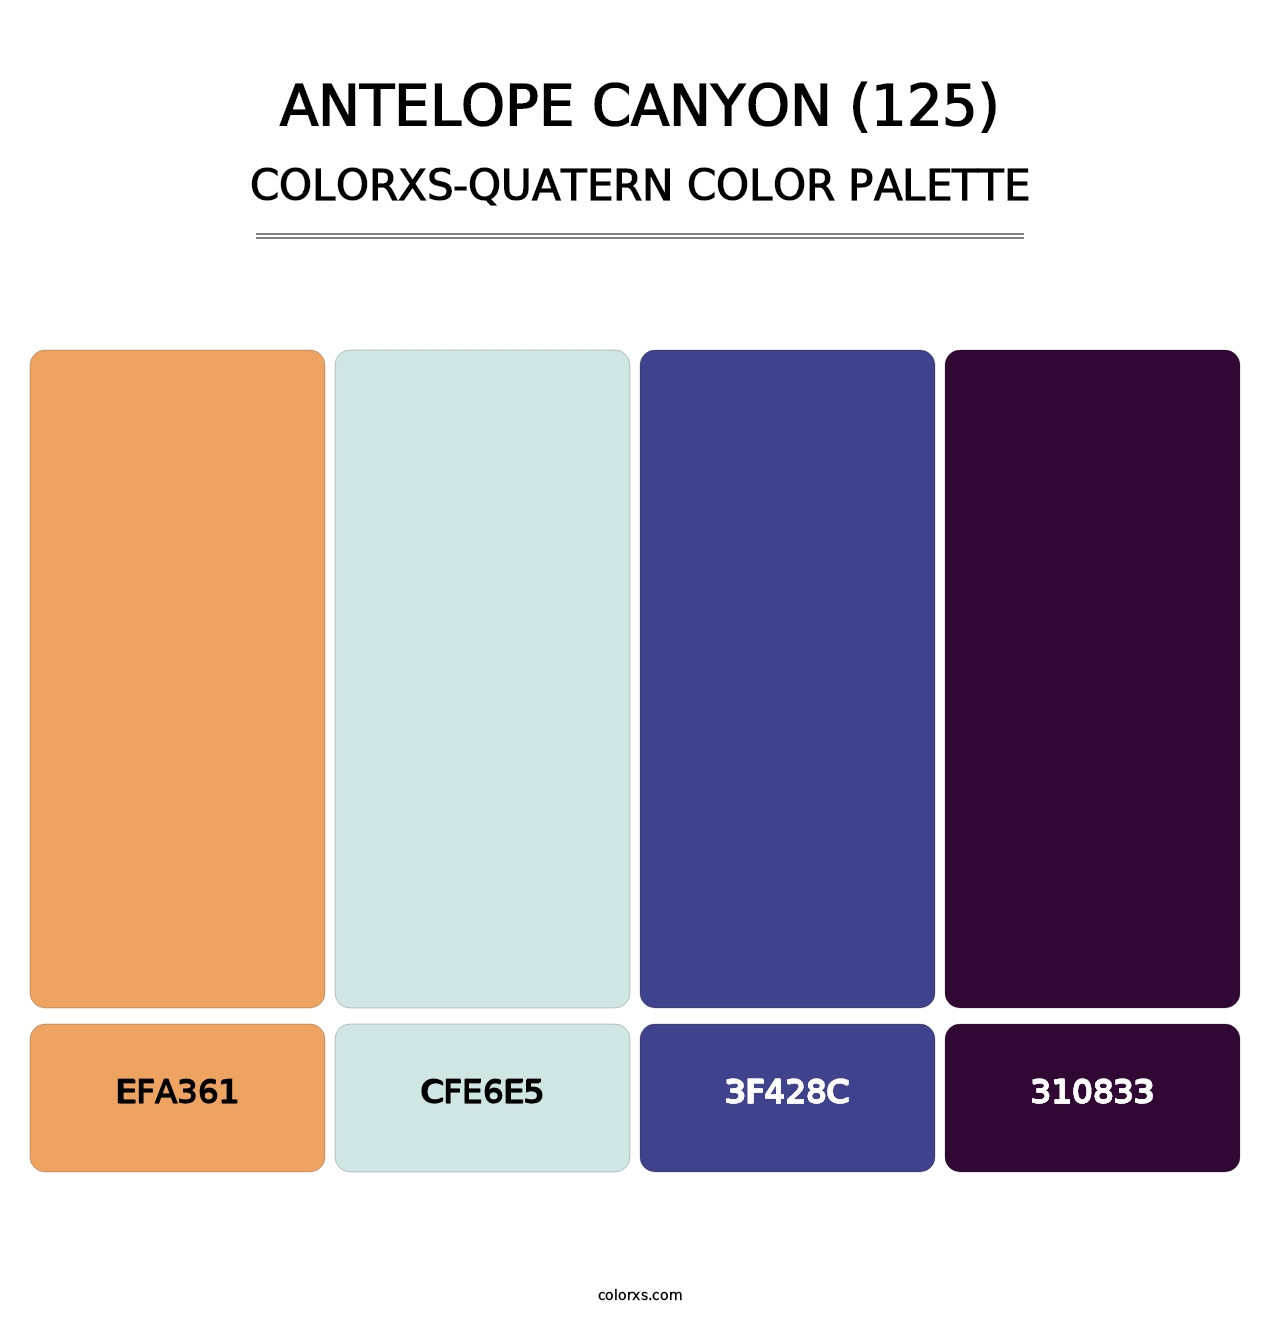 Antelope Canyon (125) - Colorxs Quatern Palette